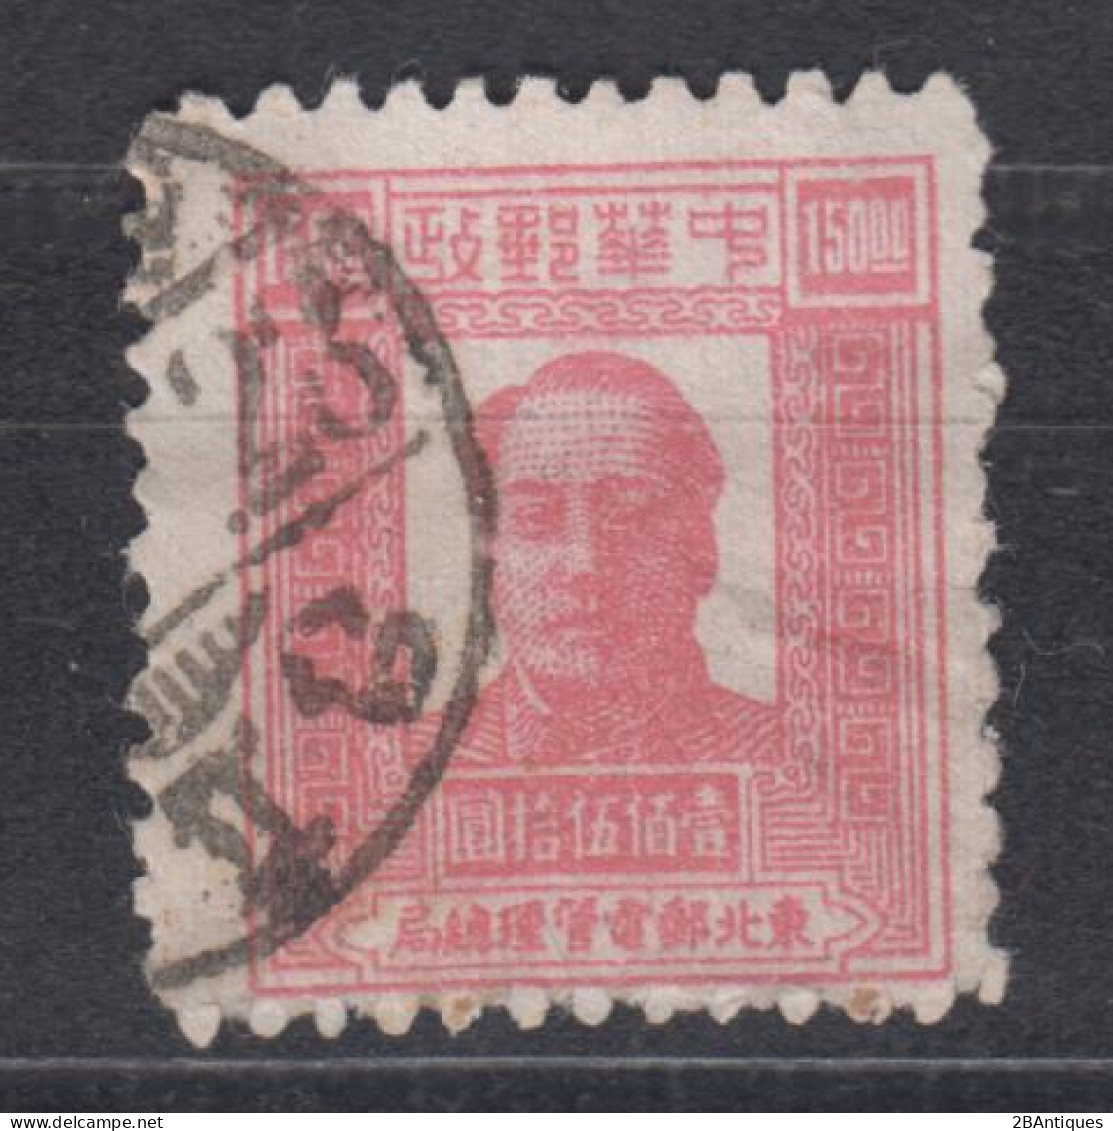 NORTHEAST CHINA 1947 - Mao - Nordostchina 1946-48